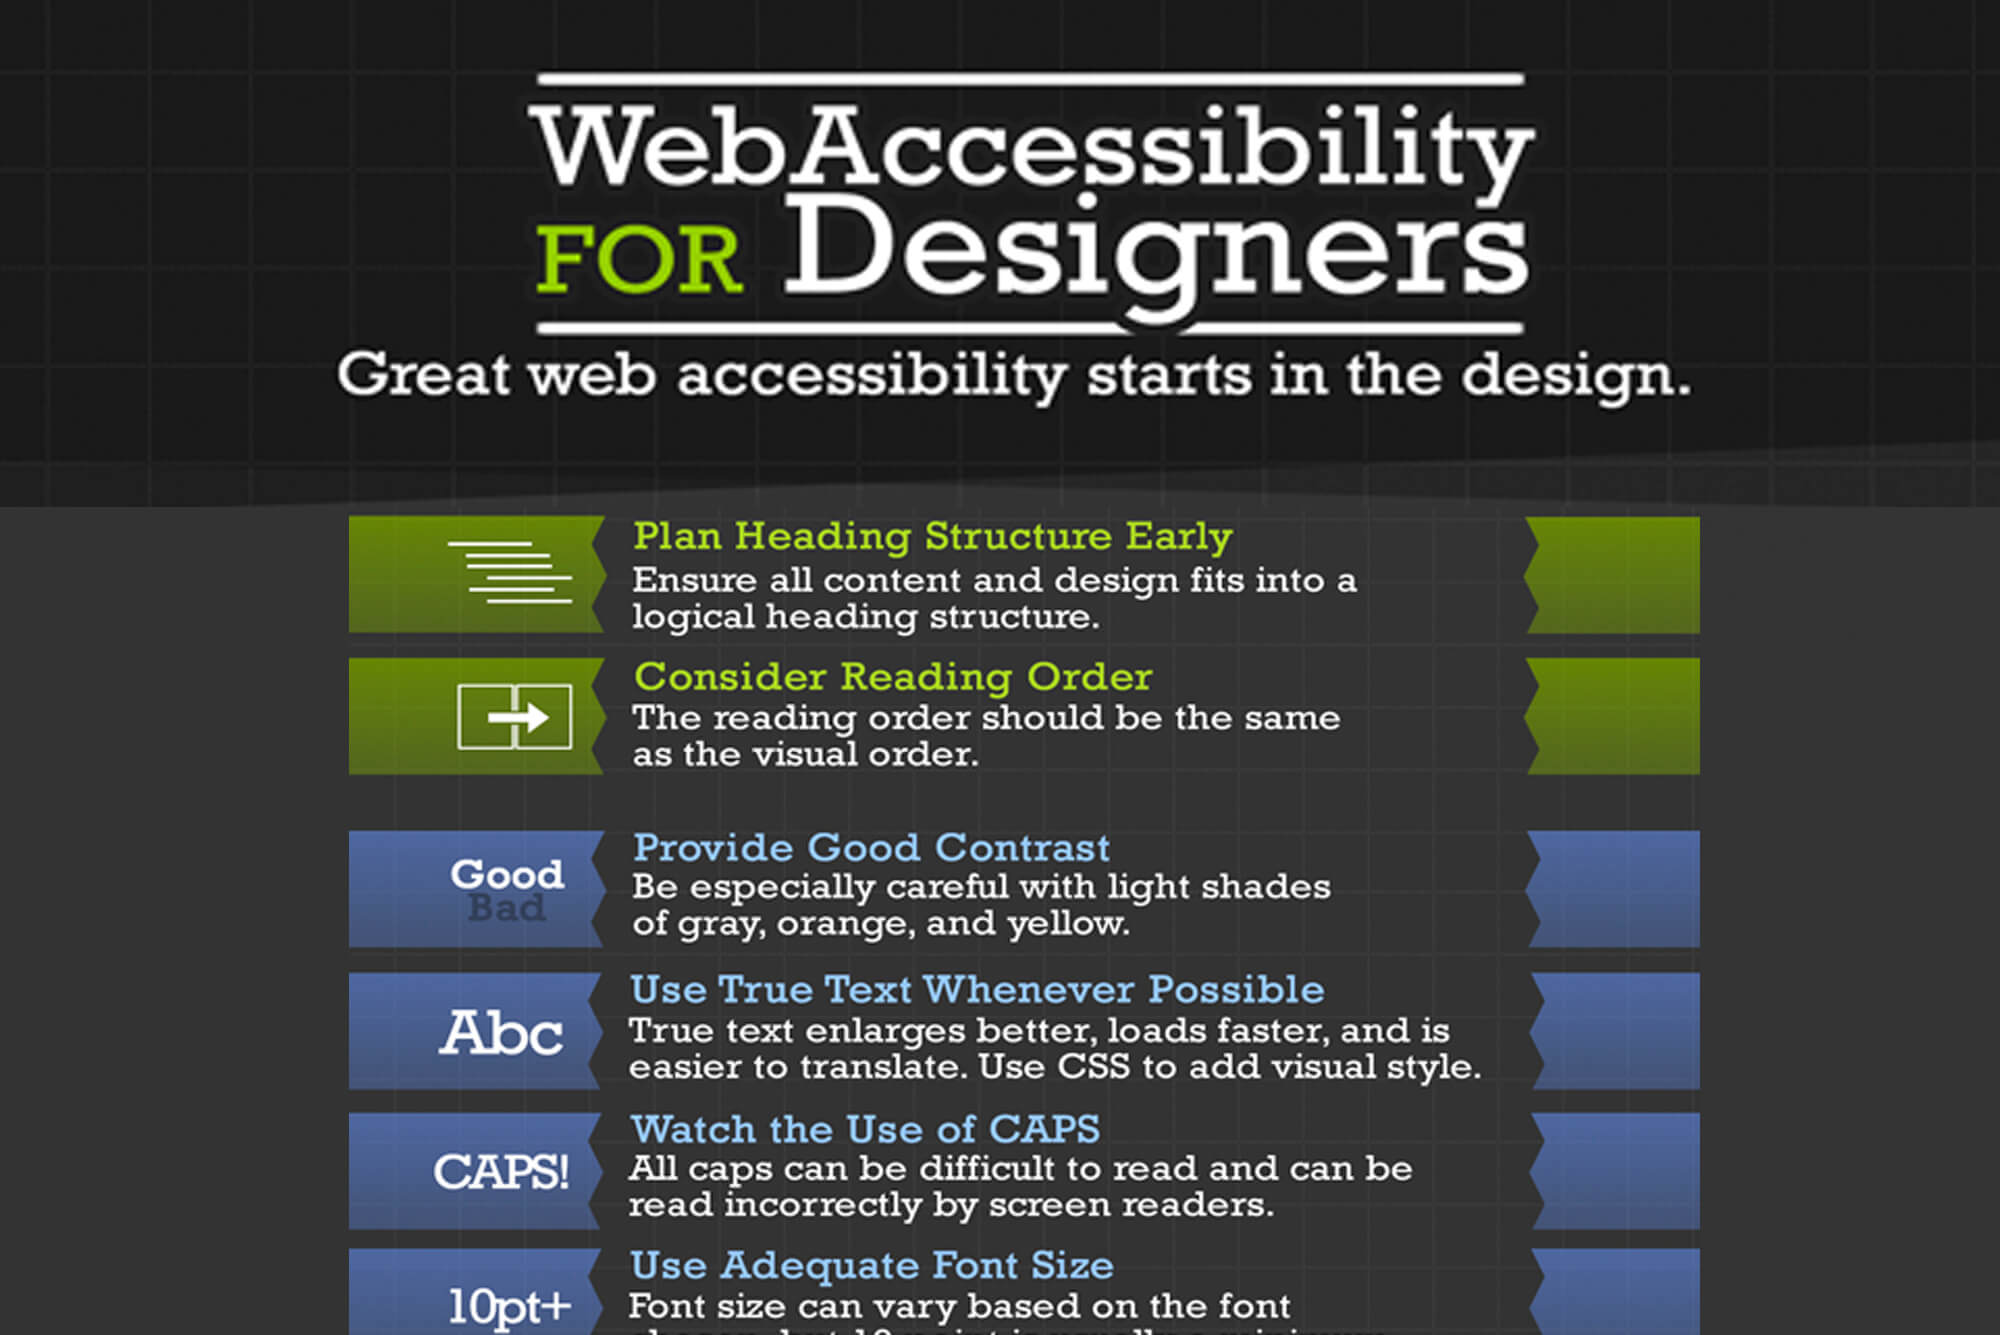 Resources for ADA designers